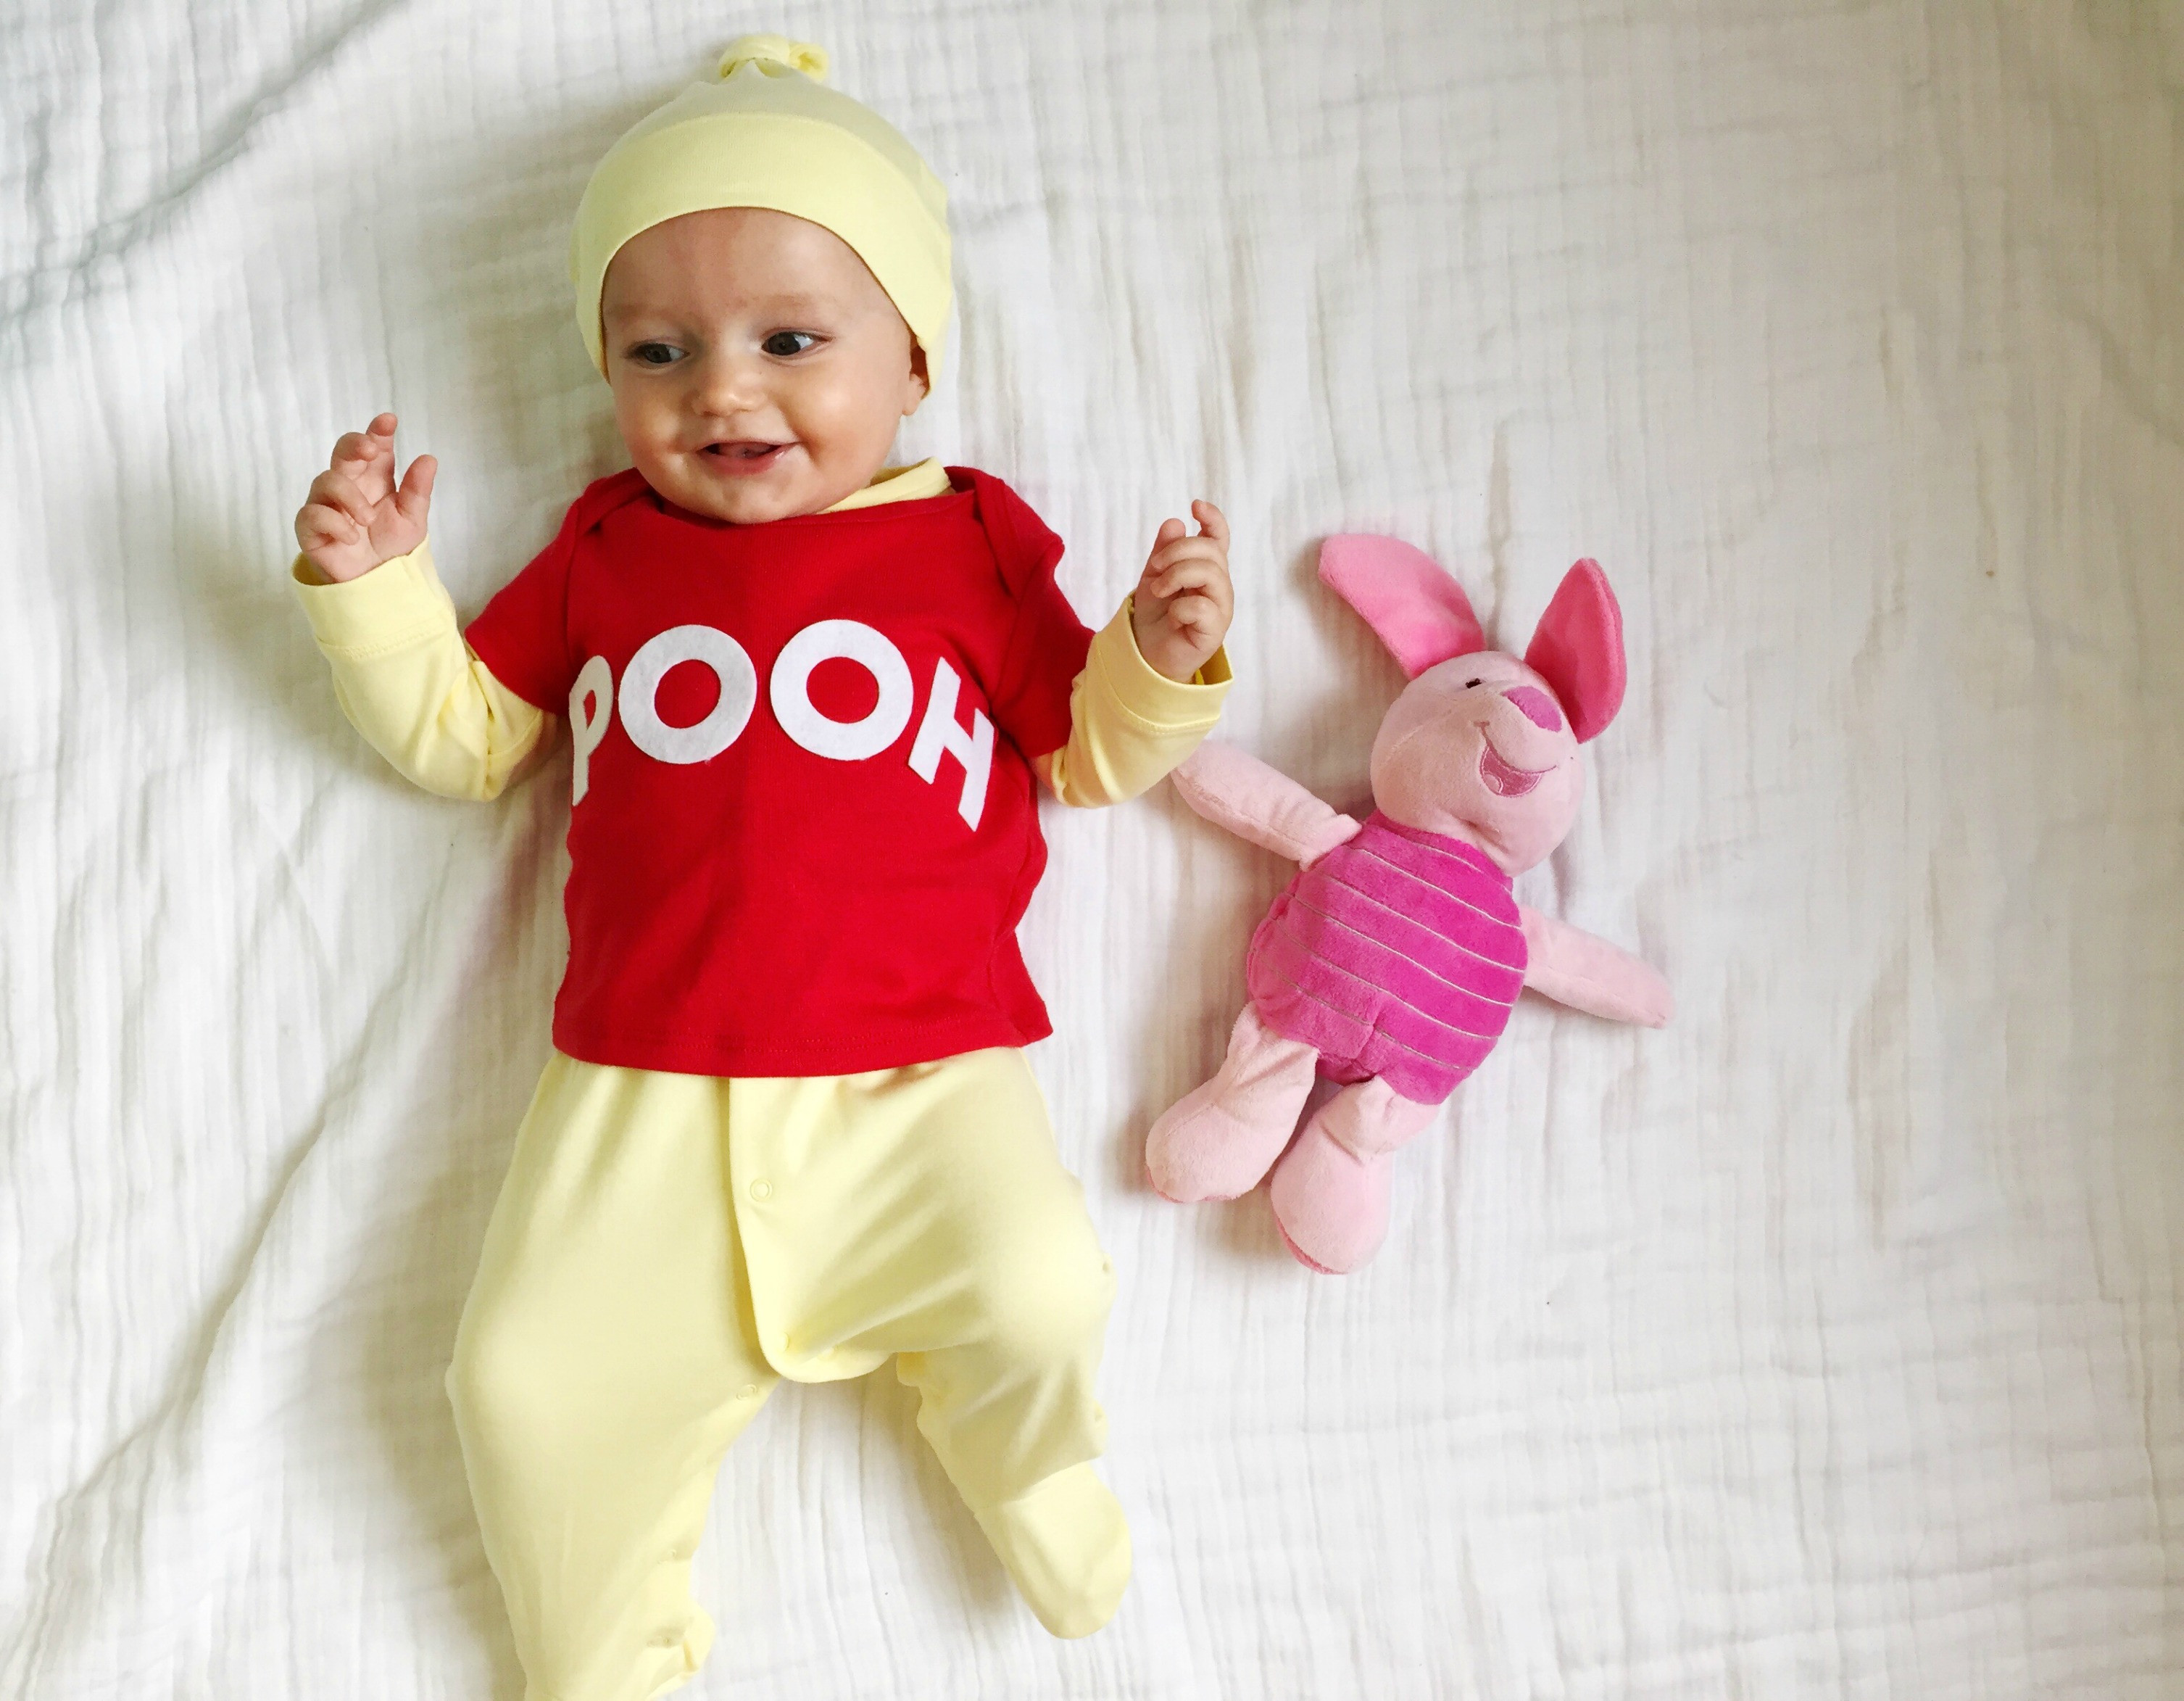 Best ideas about DIY Newborn Halloween Costumes
. Save or Pin 5 Easy DIY Halloween Costumes for Baby The Chirping Moms Now.